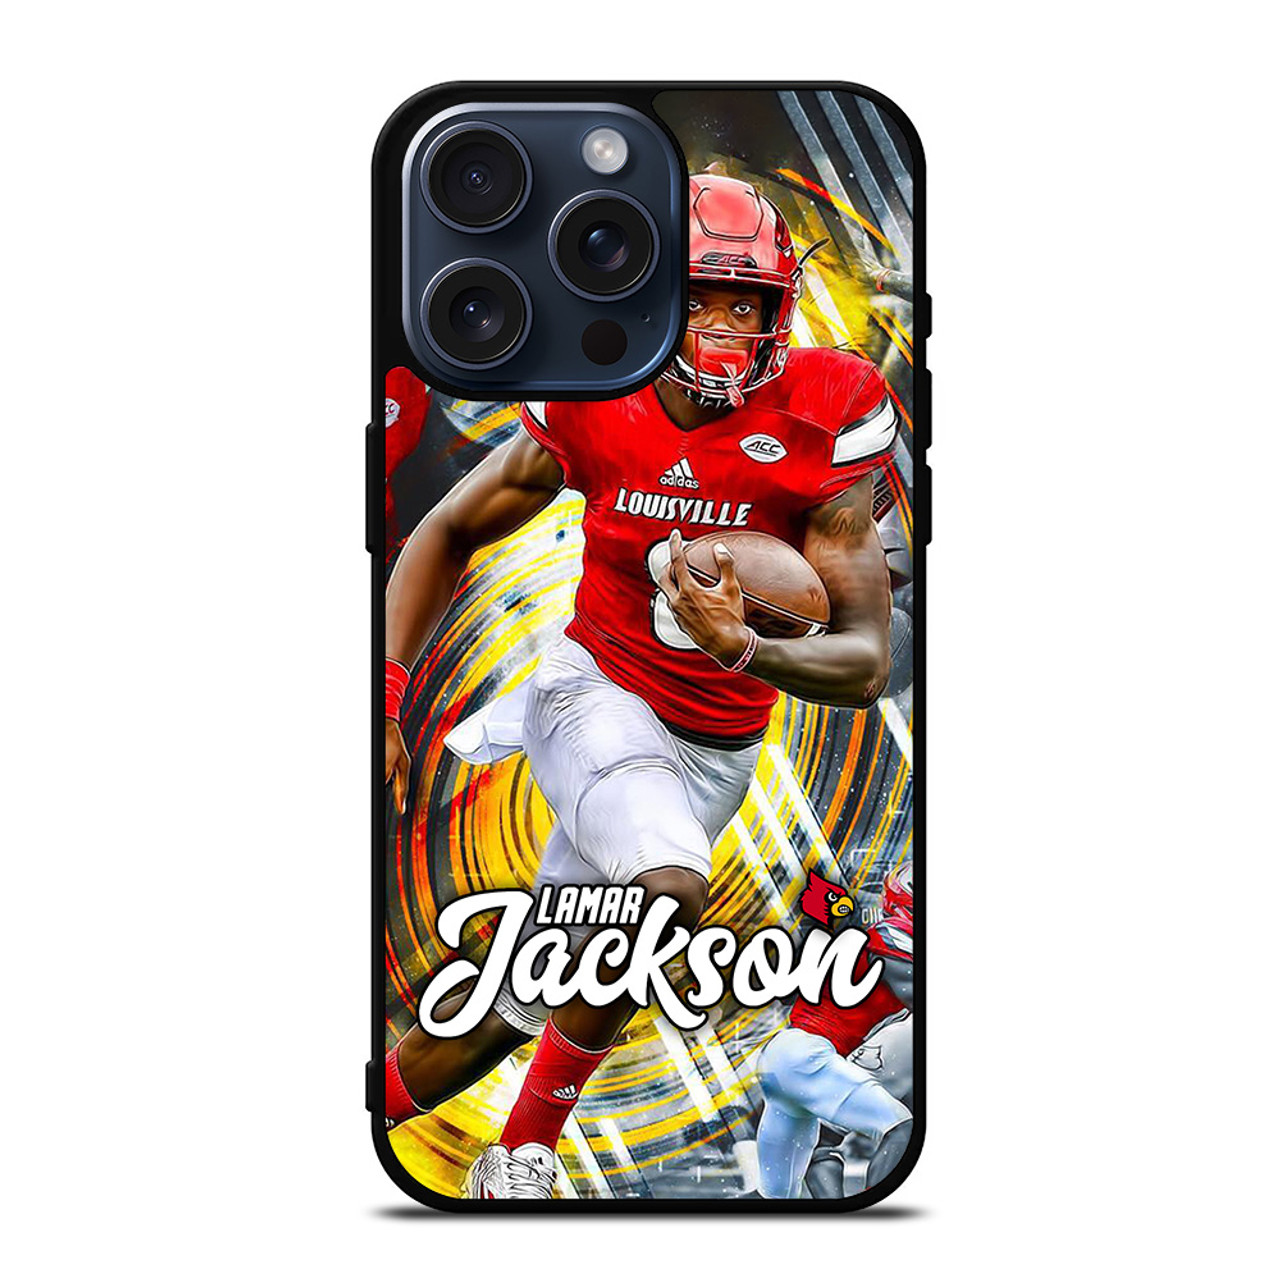 LAMAR JACKSON LOUISVILLE NFL iPhone 13 Pro Max Case Cover